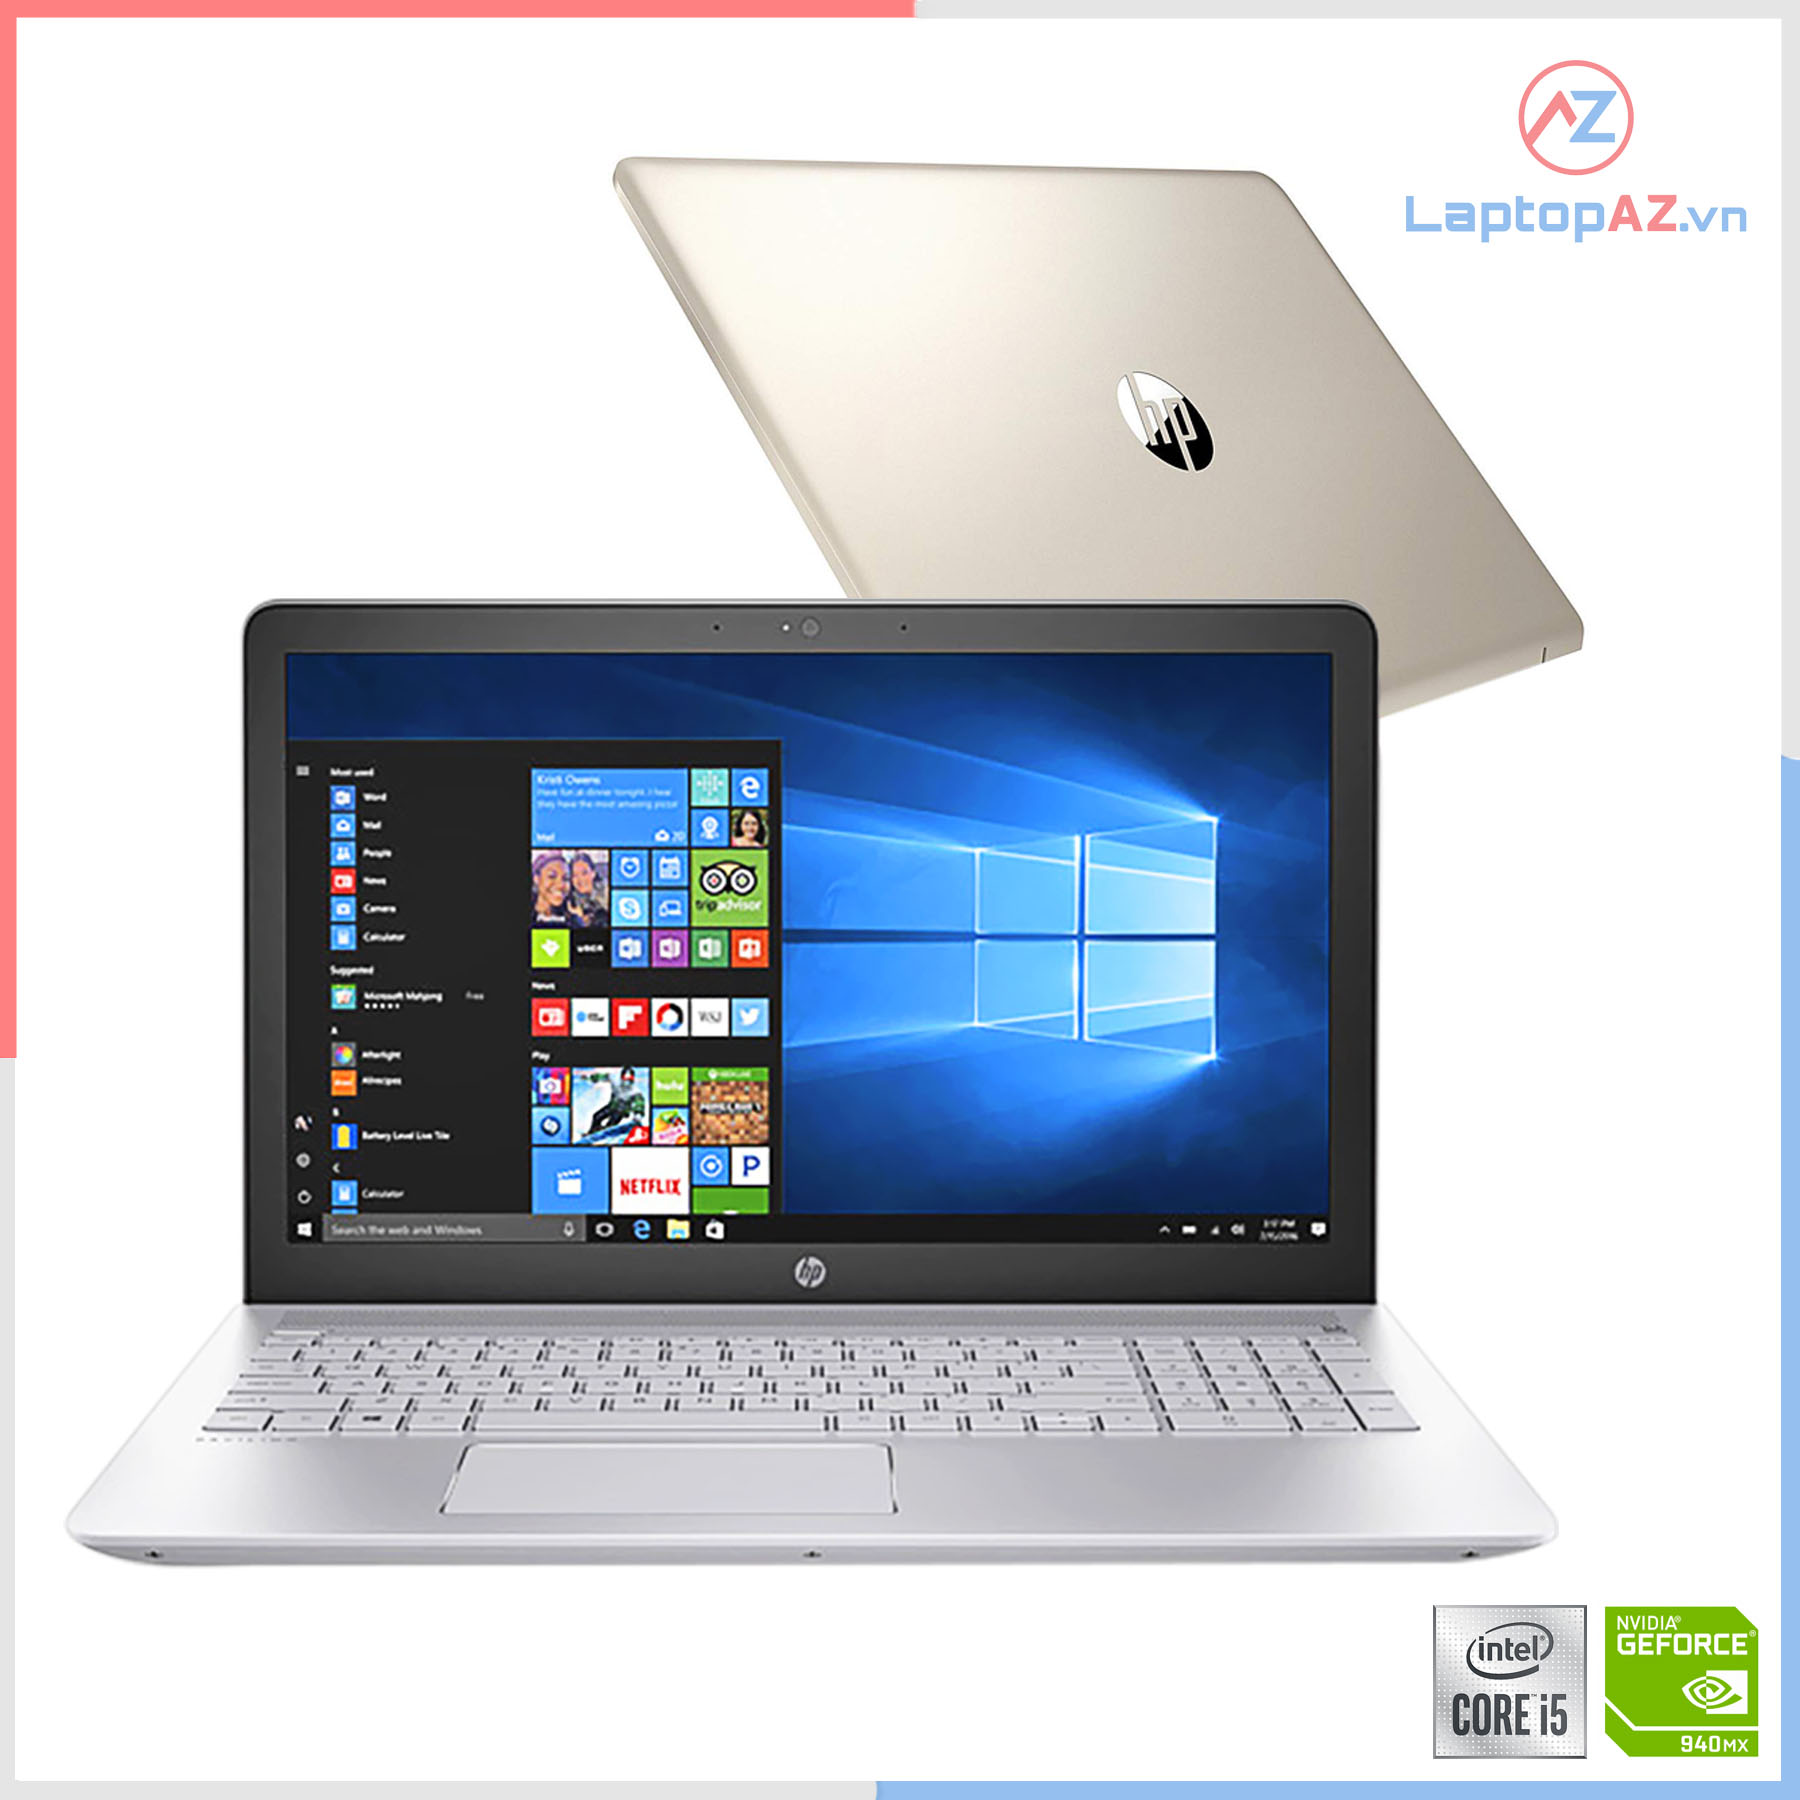 Laptop HP Pavilion 15 CC137TX (Core i5-8250U, 4GB, 1TB, VGA 2GB NVIDIA GeForce 940MX, 15.6 inch HD)